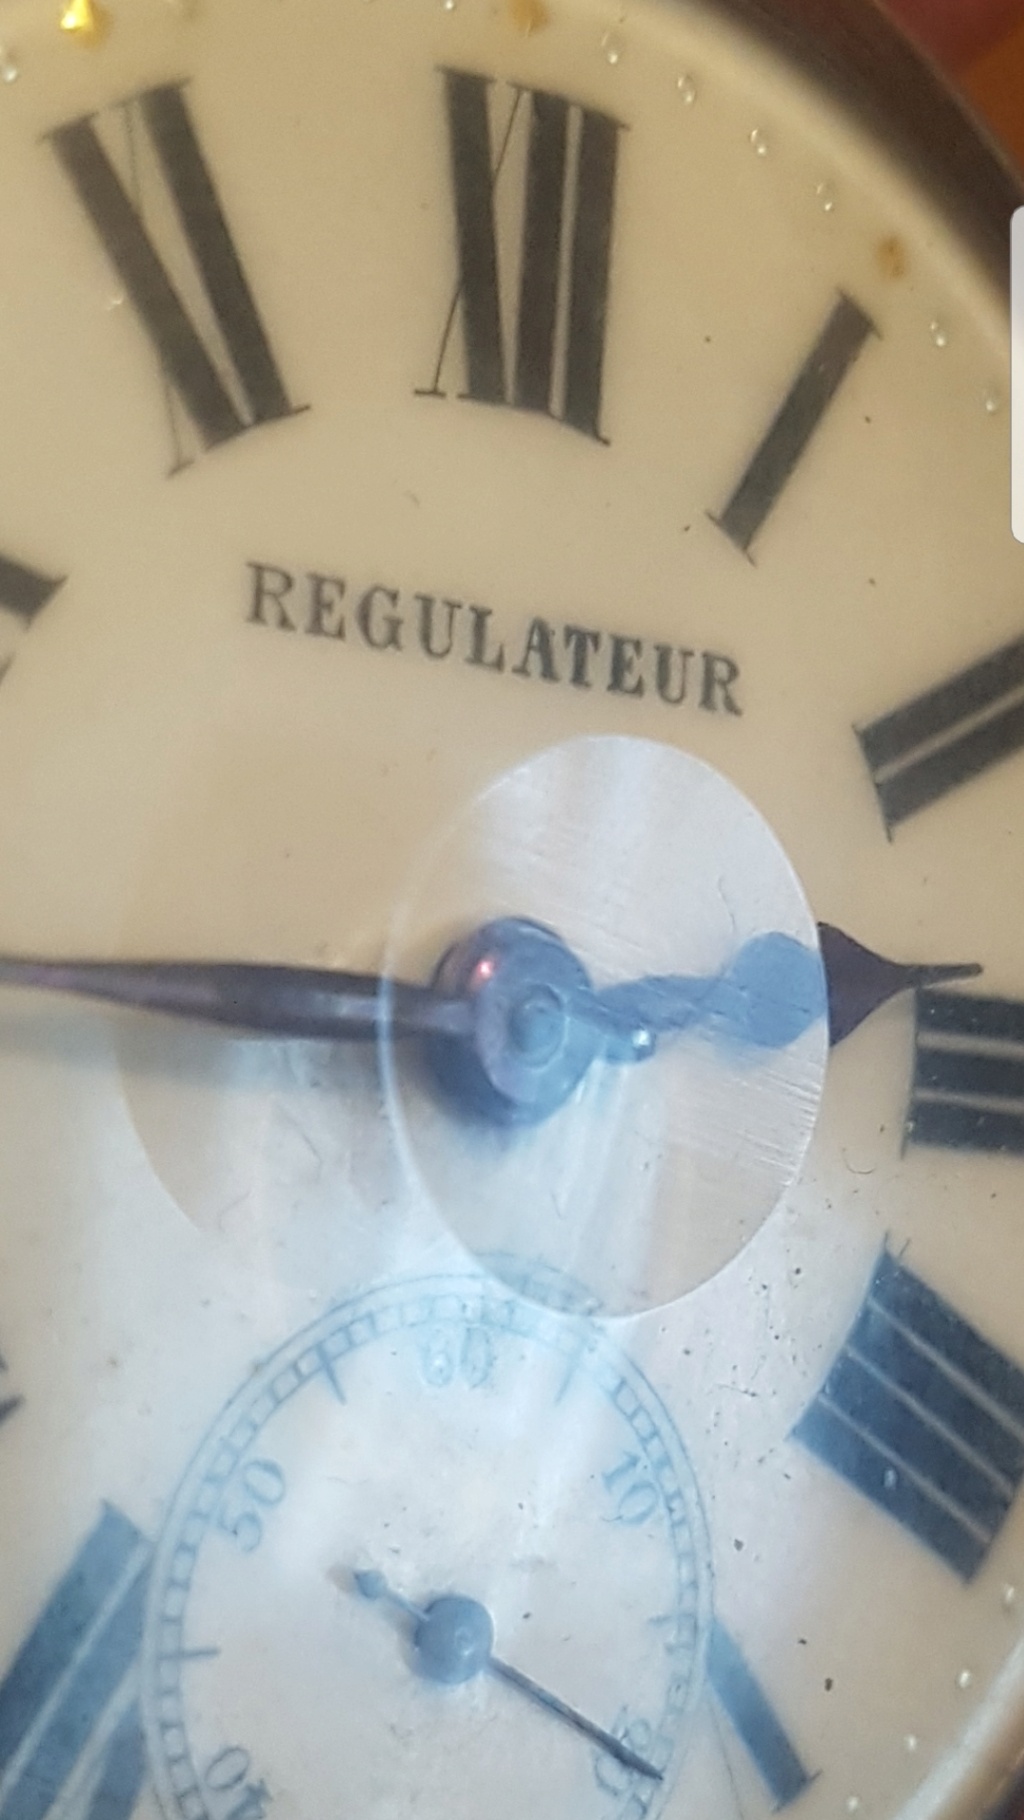 Relógio Regulateur   Screen28